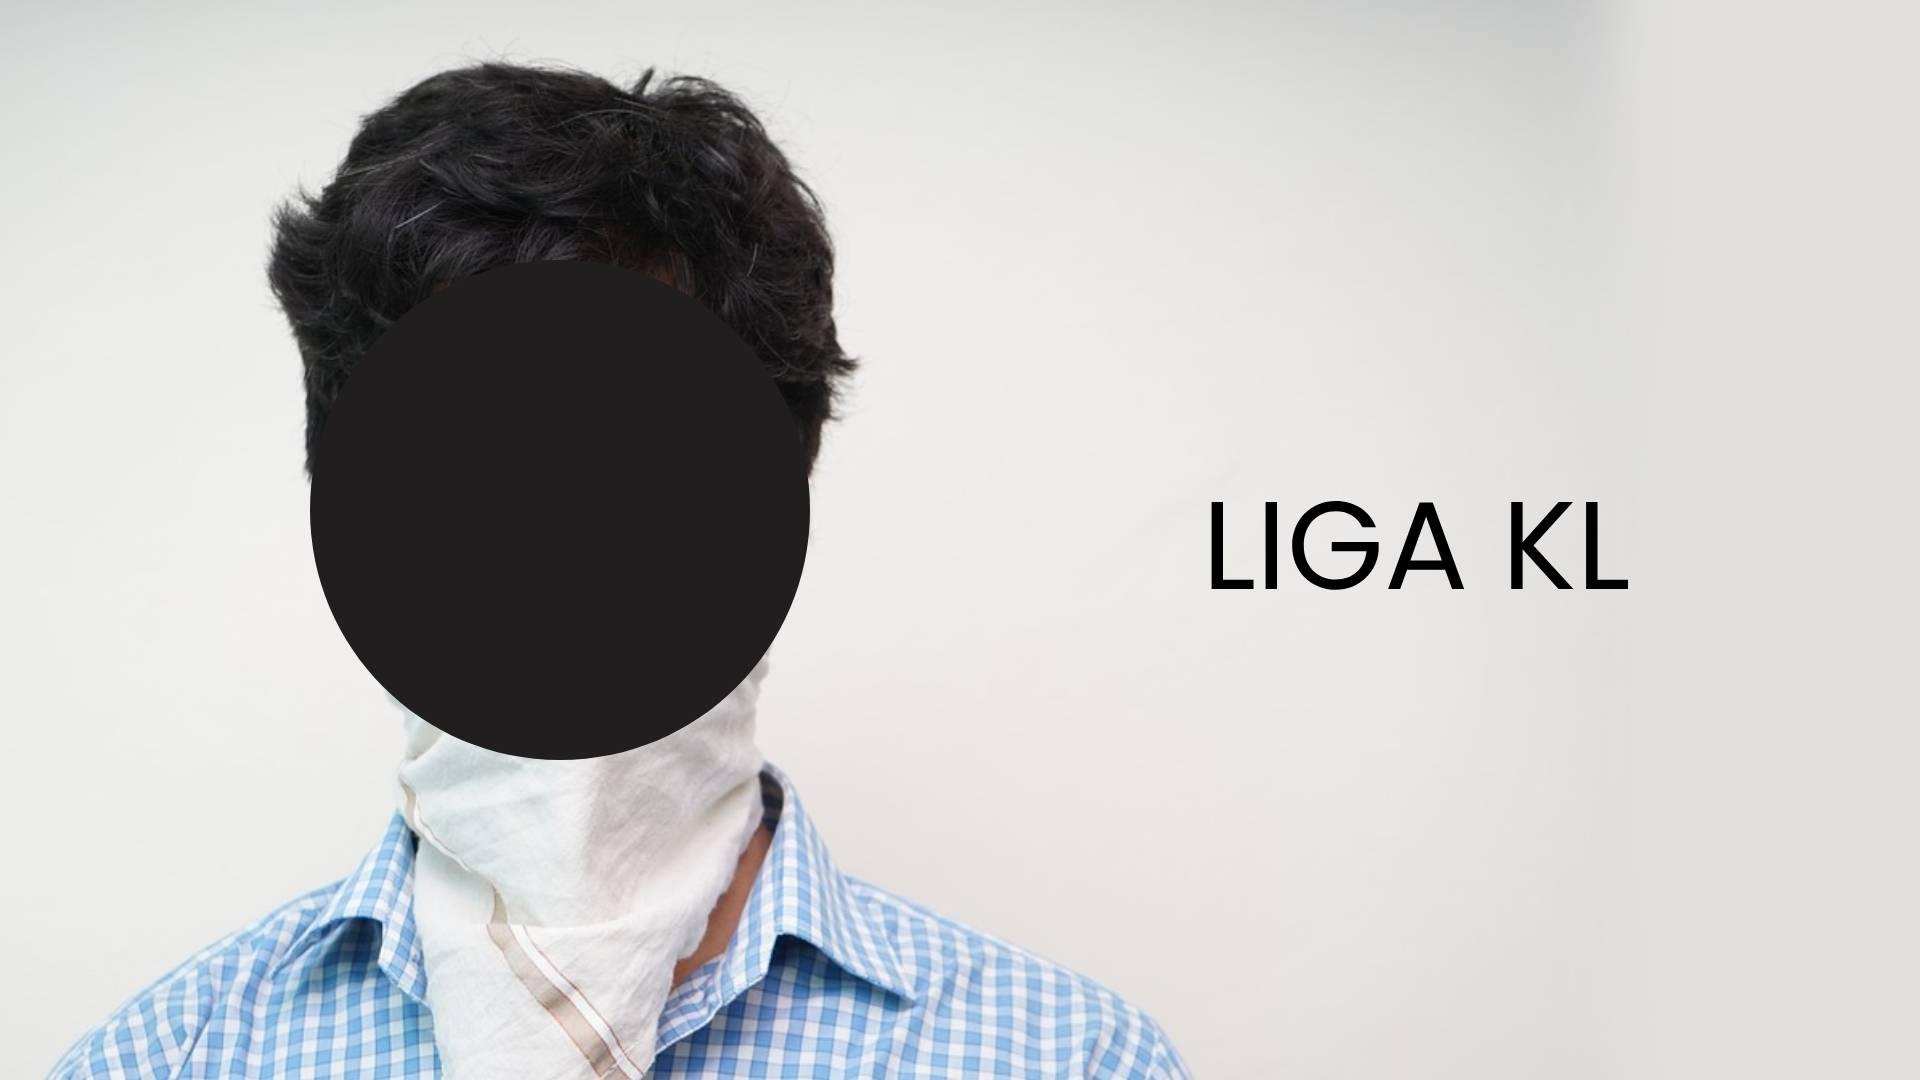 kontroversi liga kl "Suka Hati Ubah Format" - Liga KL Tercalit Kontroversi?